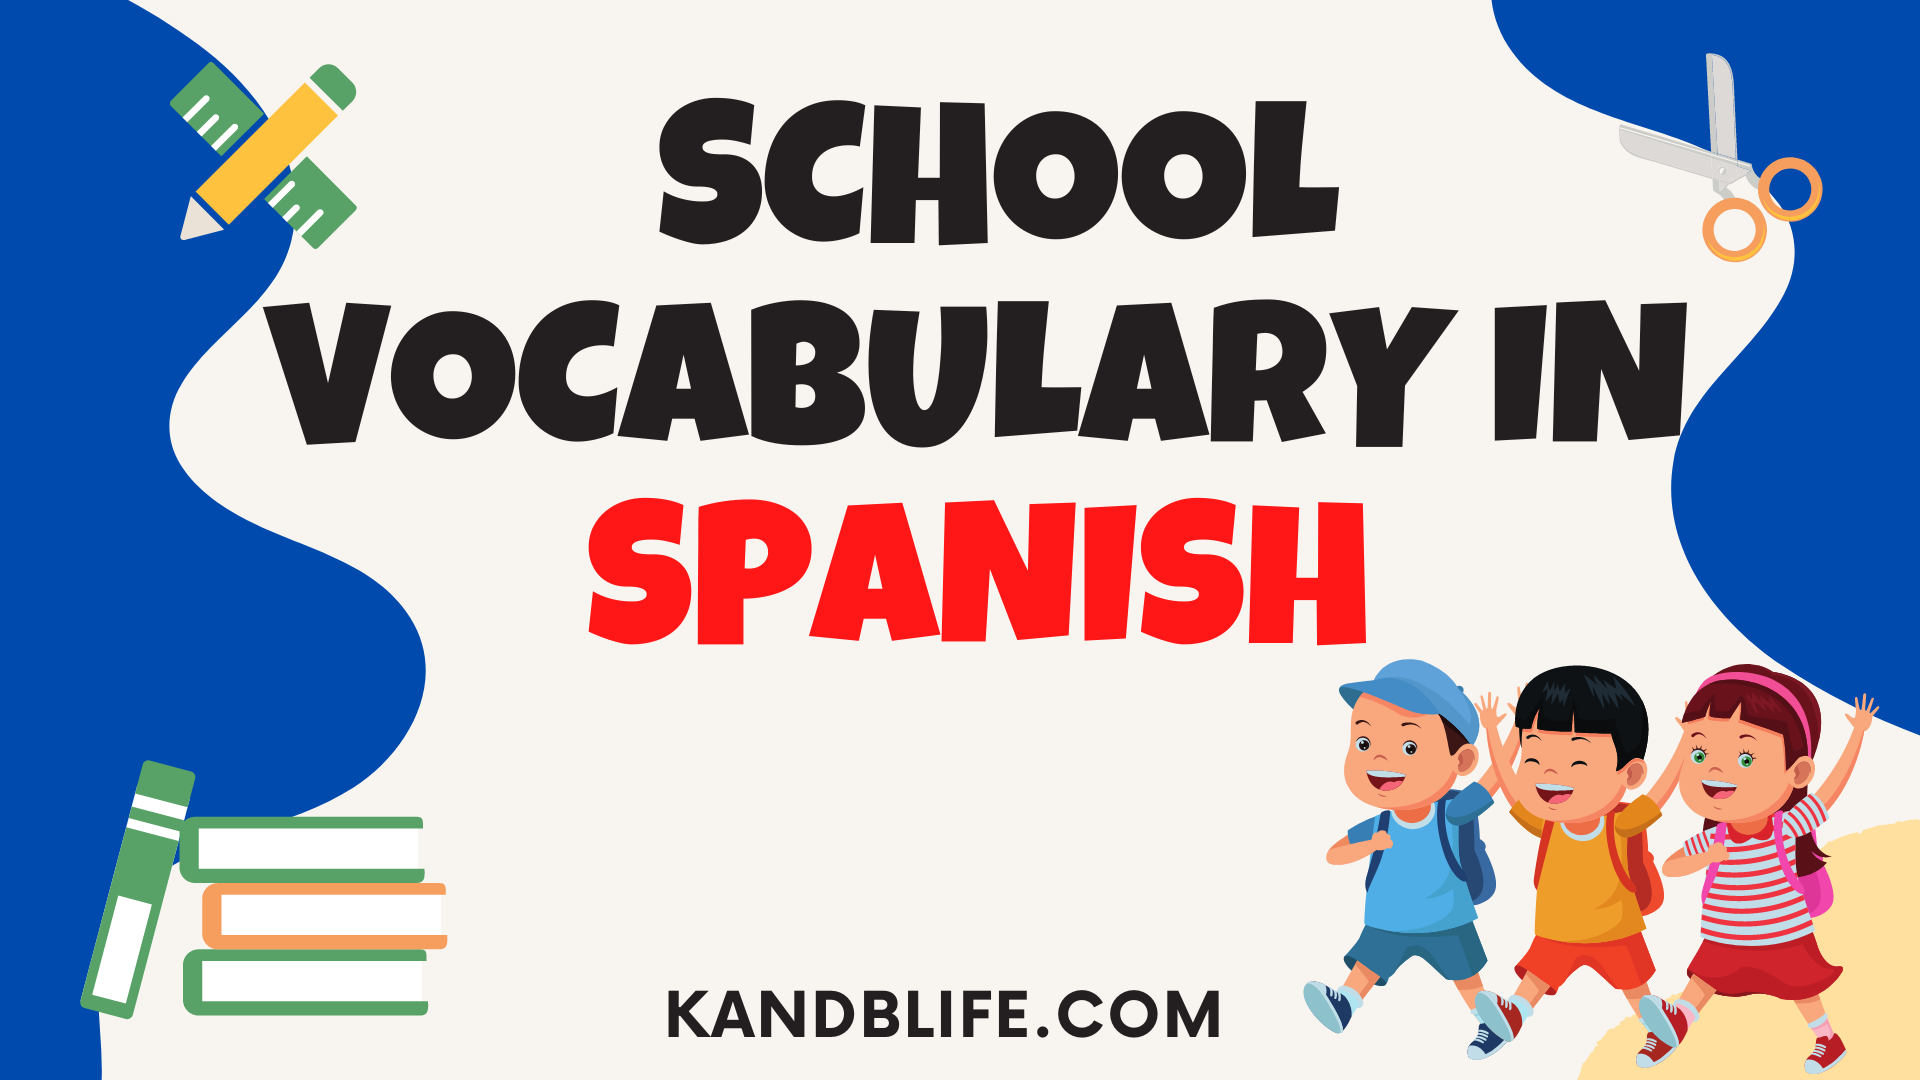 School Vocabulary in Spanish cover. 